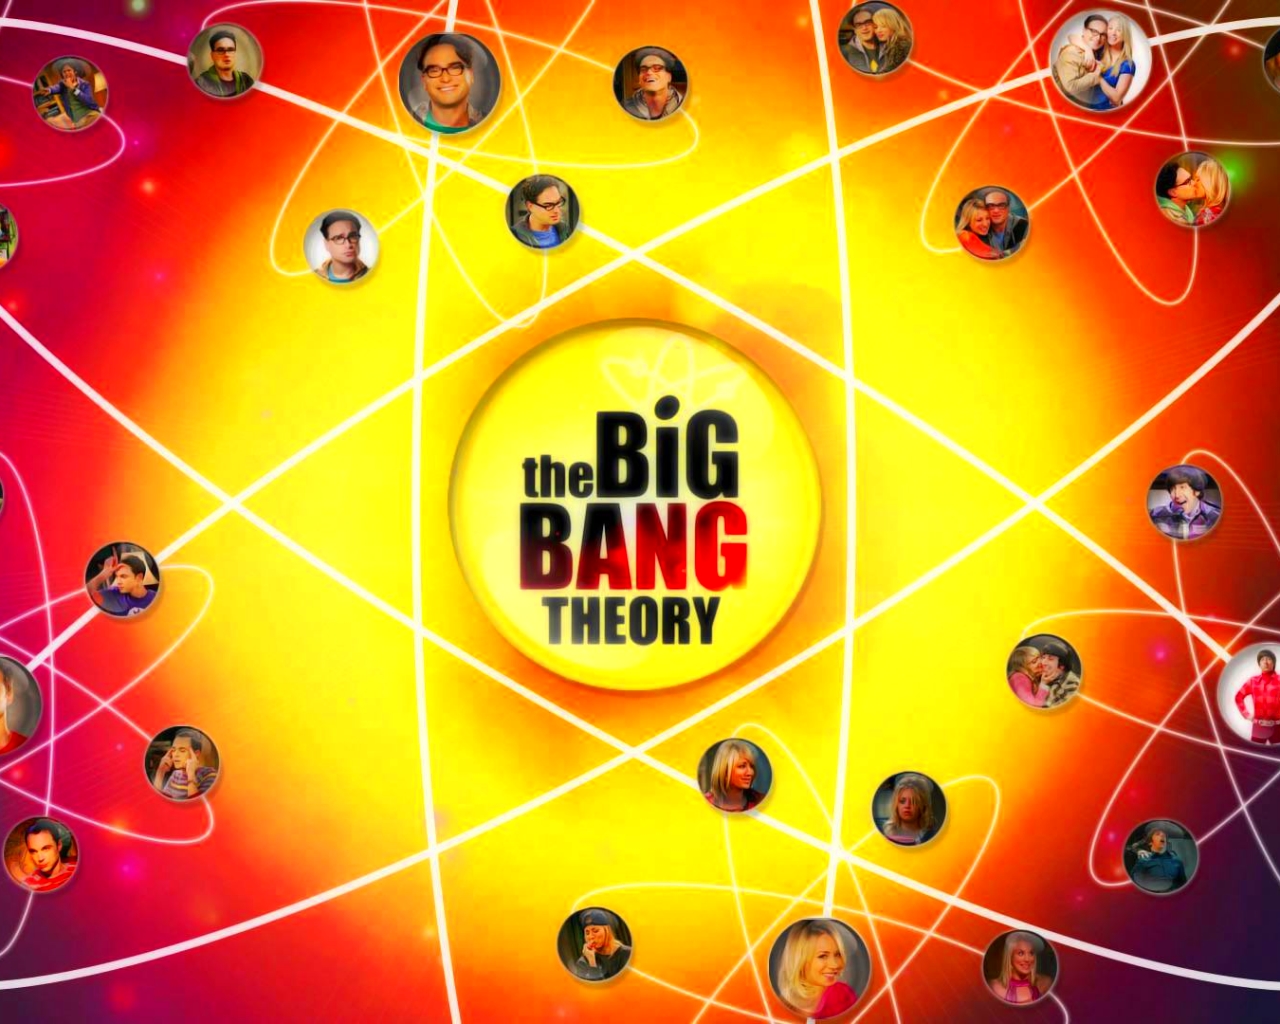 The Big Bang Theory 壁紙 ビッグバン セオリー ギークなボクらの恋愛法則 壁紙 ファンポップ